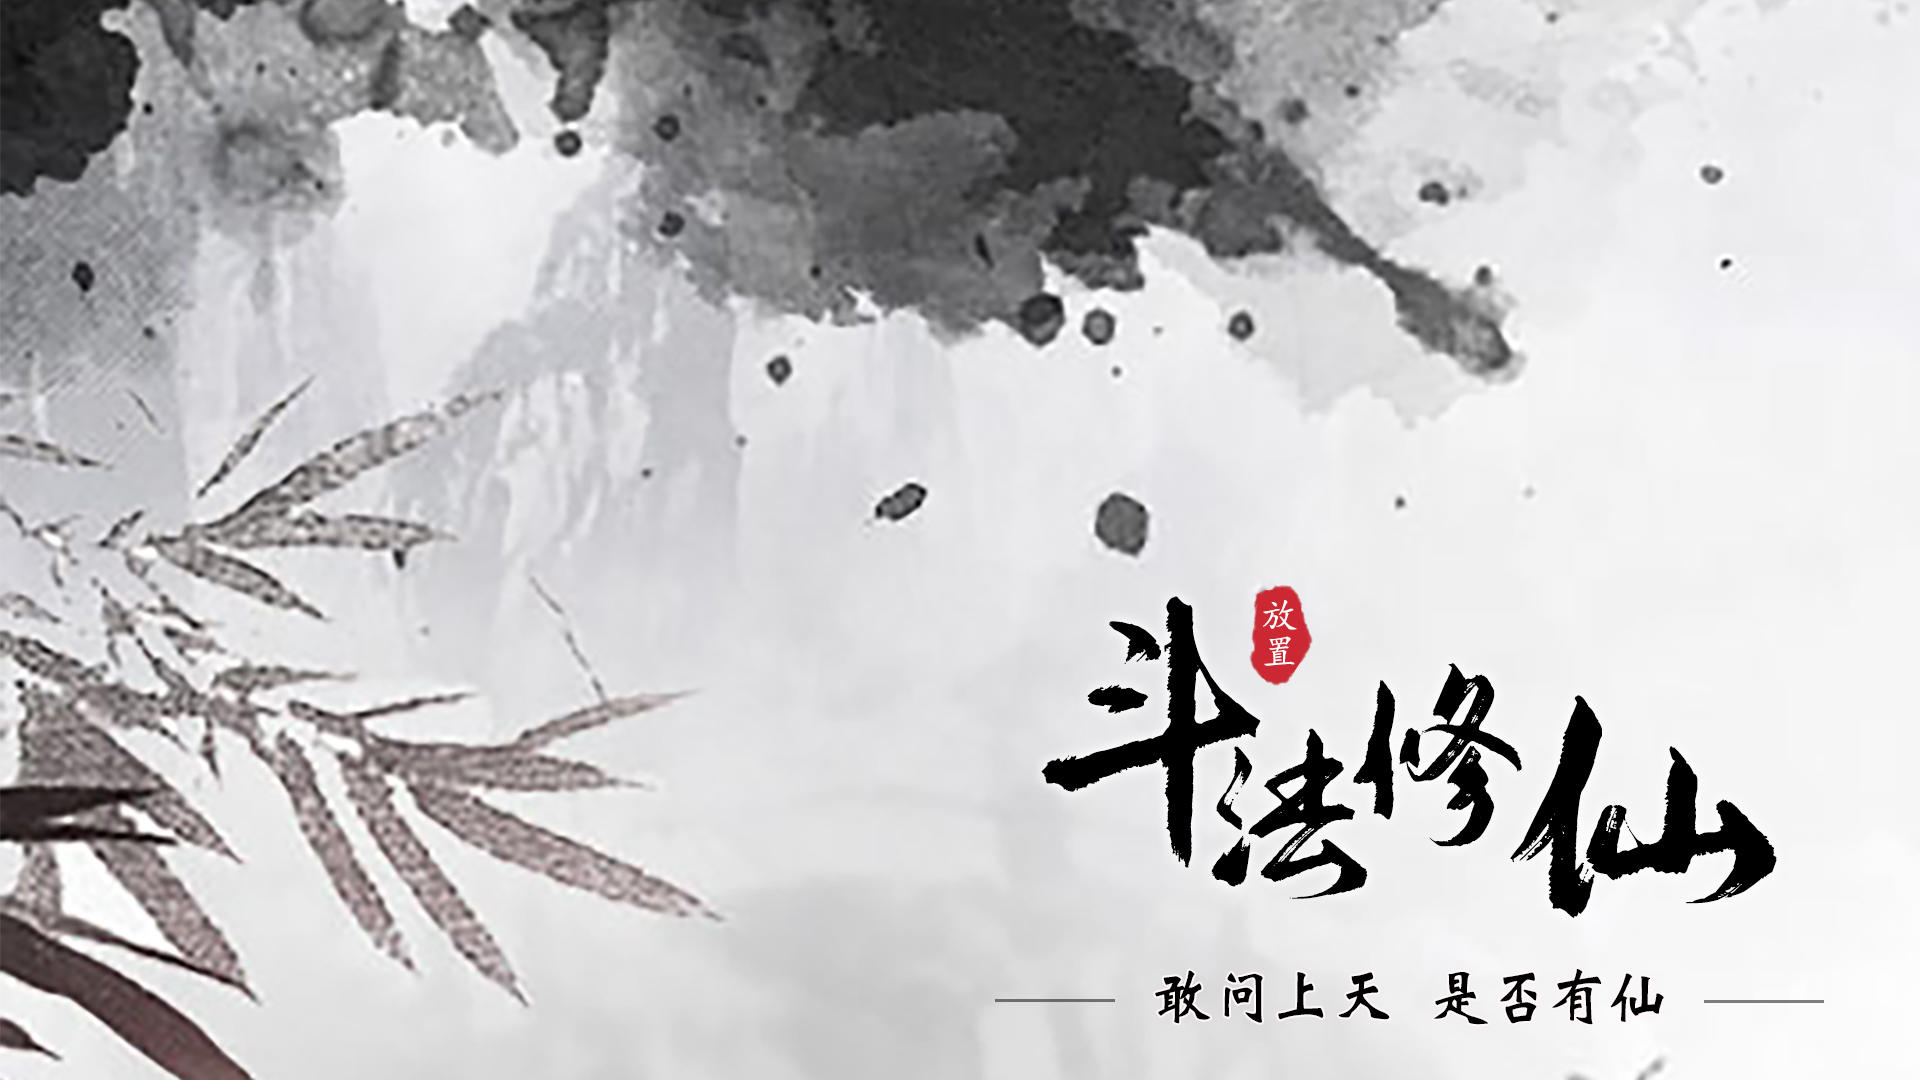 Banner of 戦闘スキルと不死者の育成 